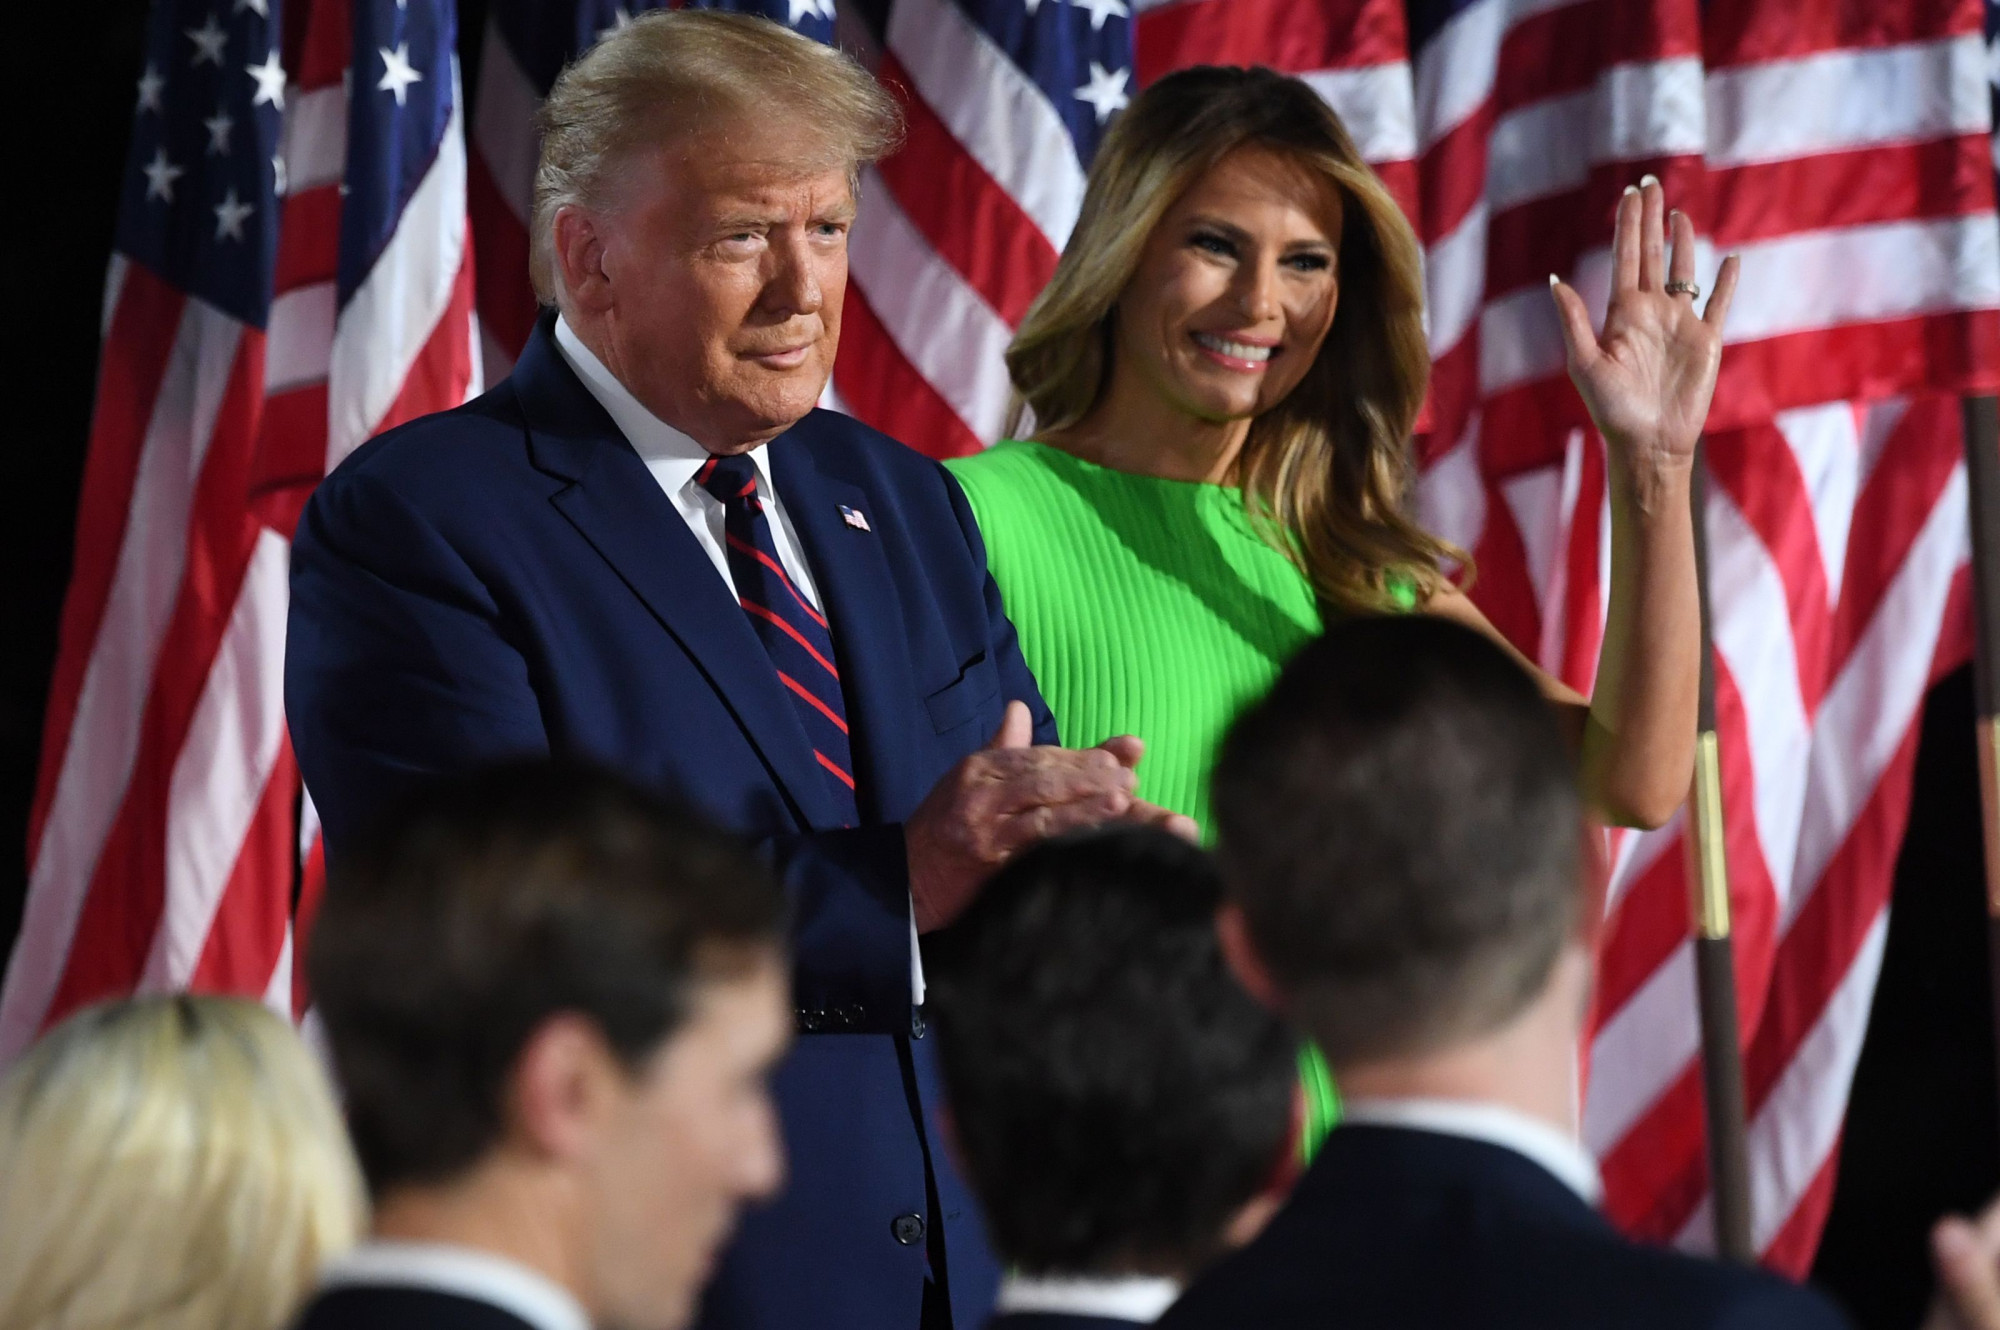 ‘Donald Trump Has Changed Washington’: Ivanka Trump Praises Father at GOP Convention